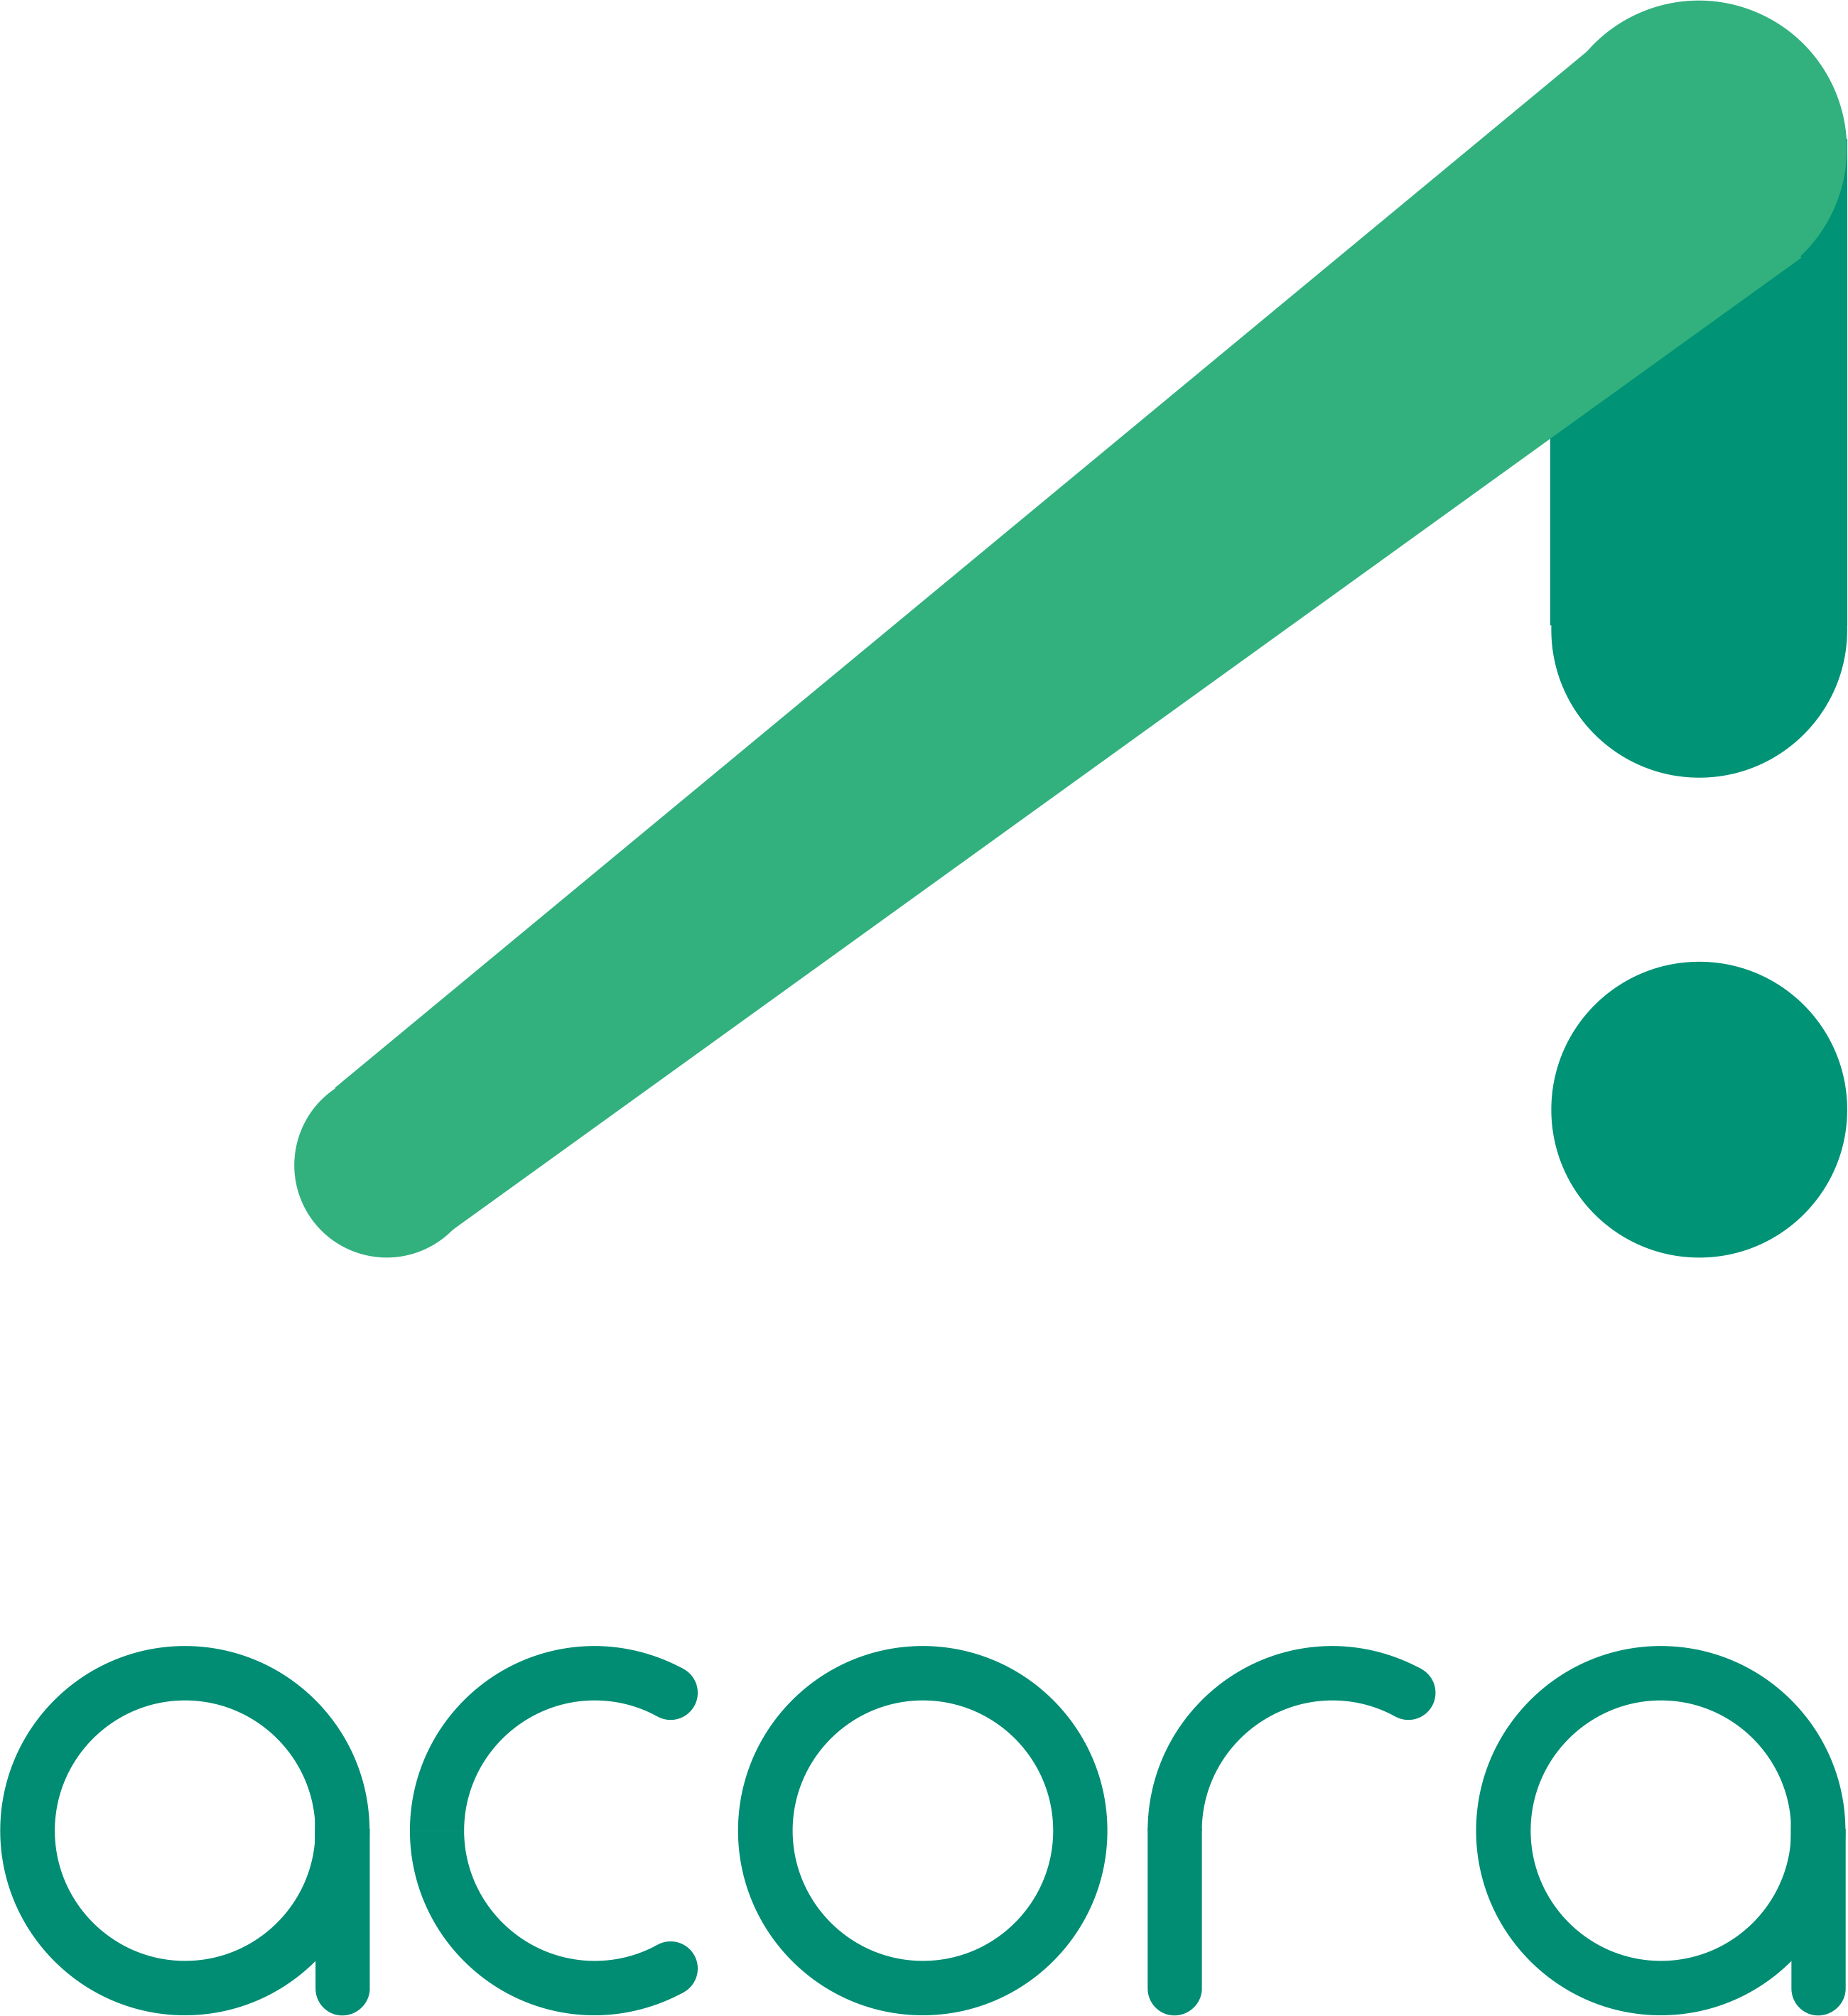 Acora digital experience platform (DXP) and content management system (CMS)  logo